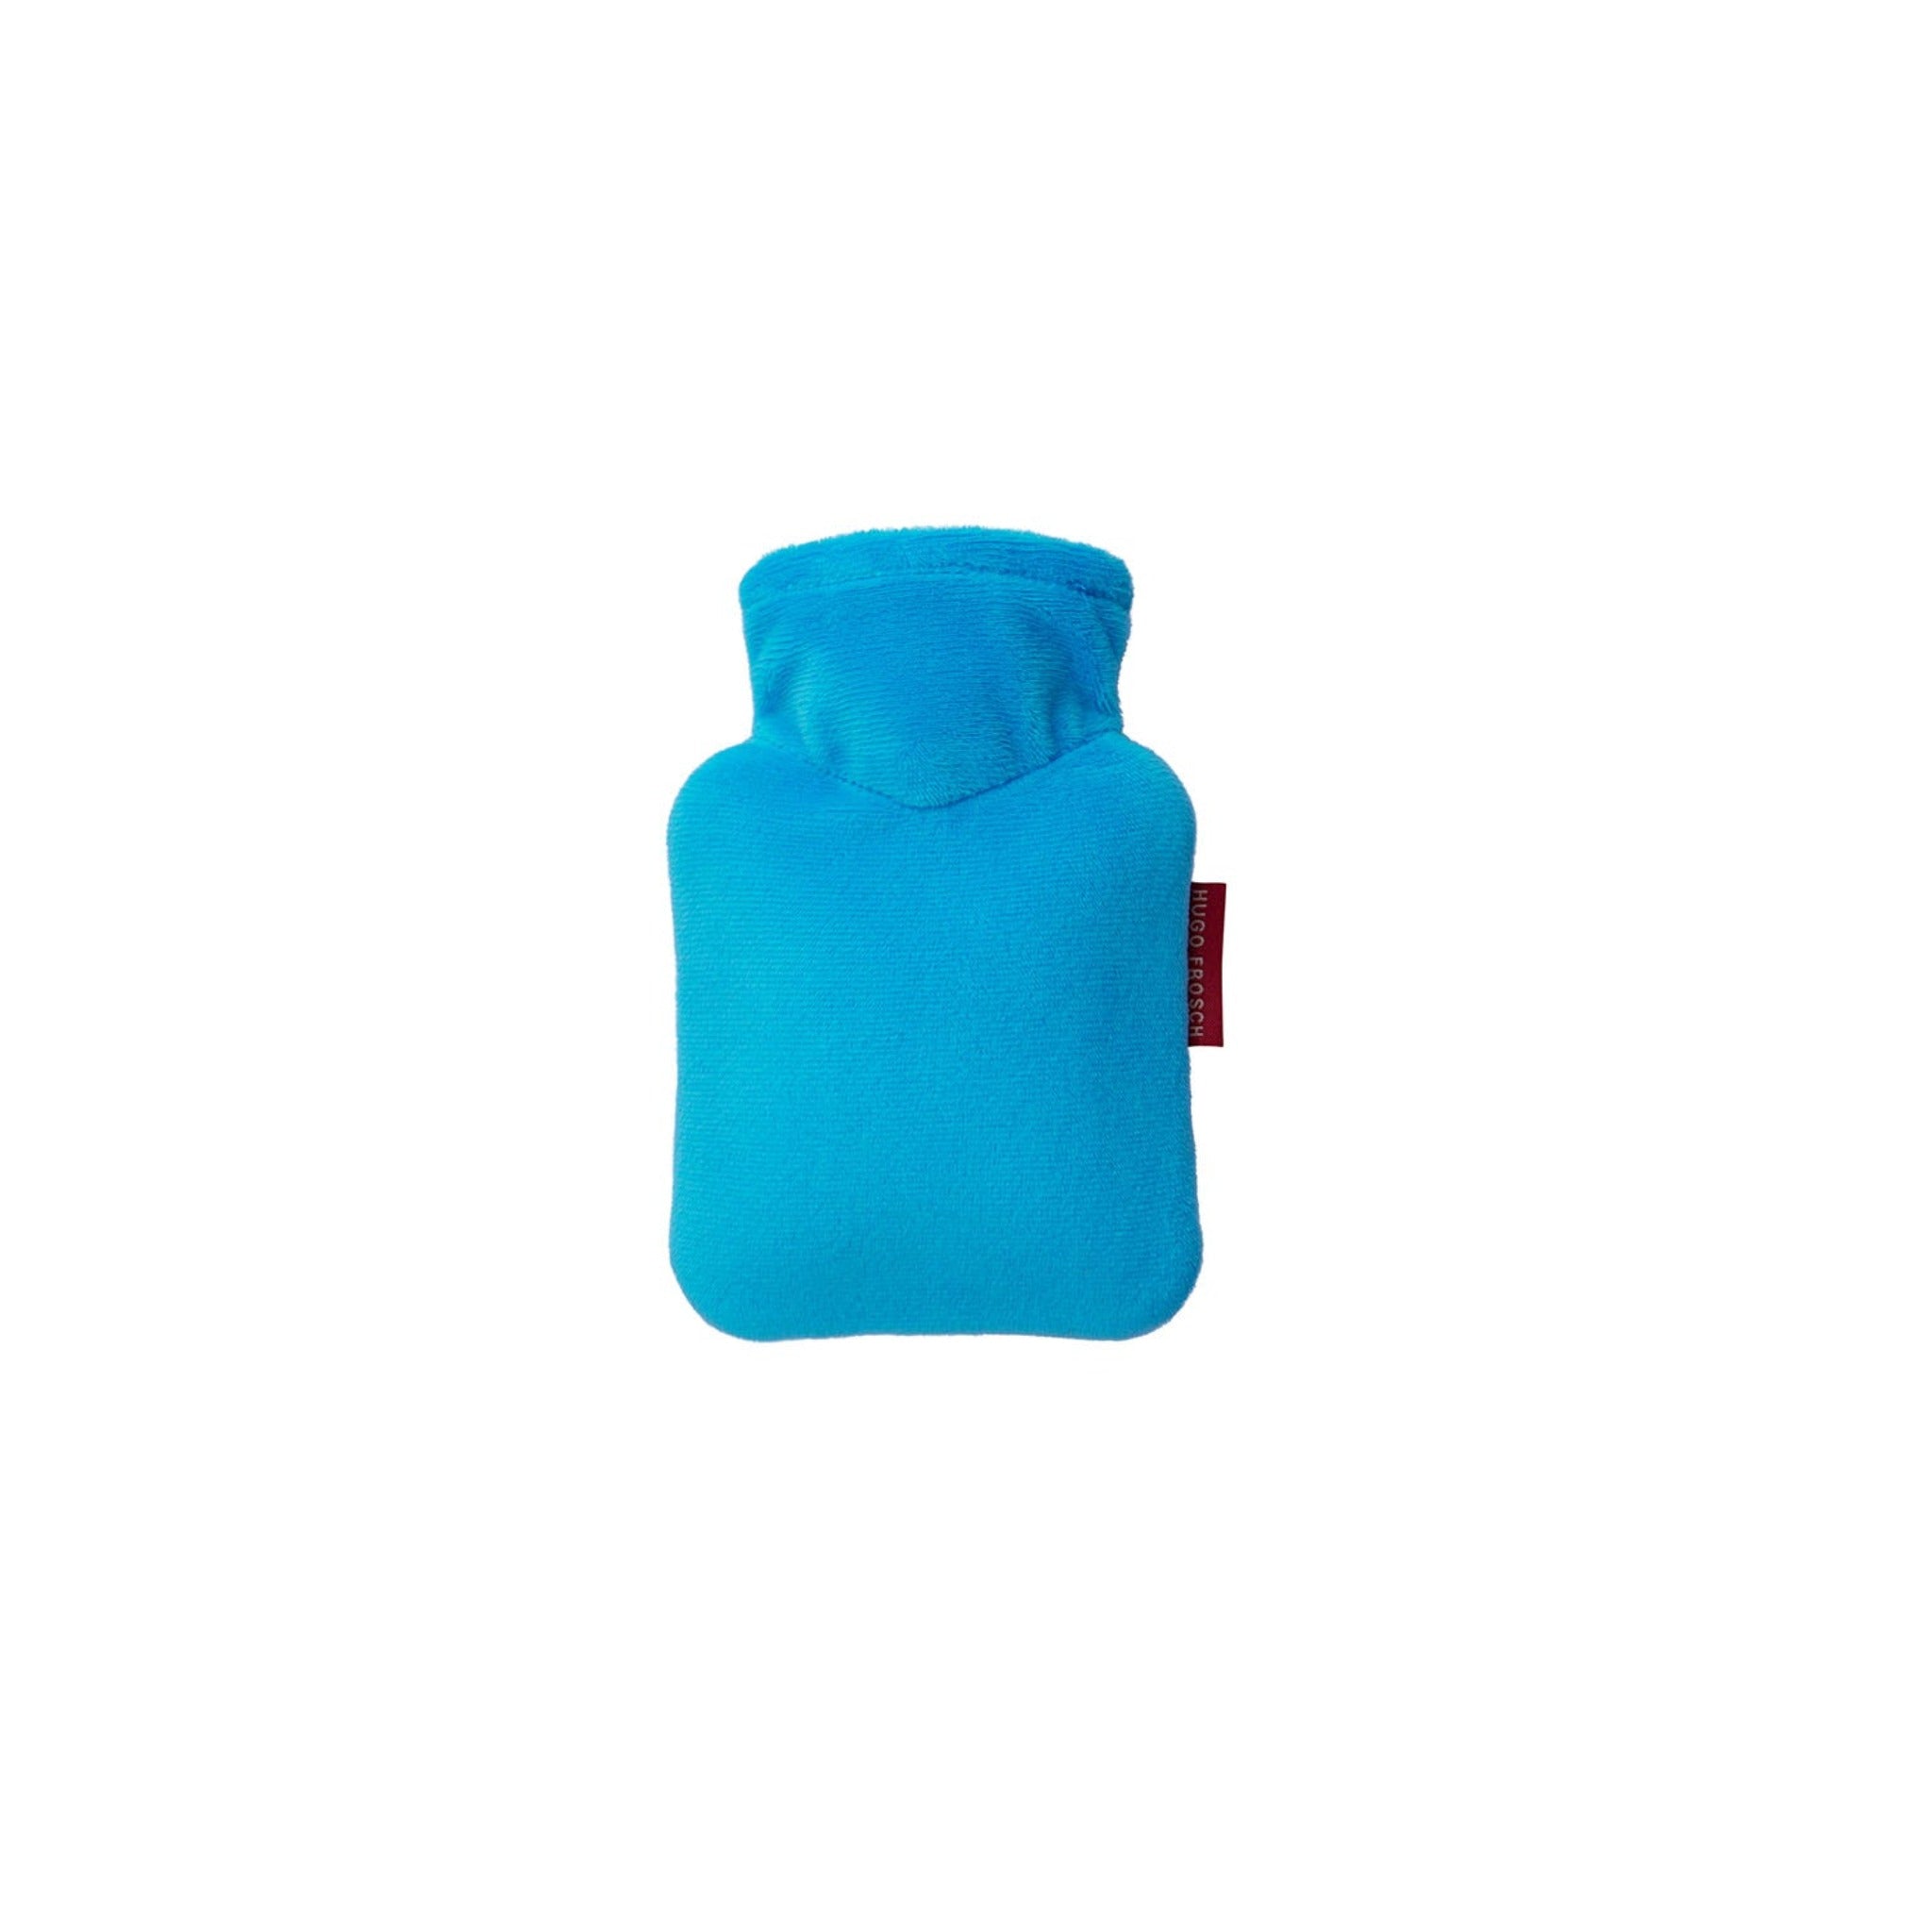 0.2 Litre Luxury Mini Hot Water Bottle with Aqua Plush Velour Cover (rubberless)